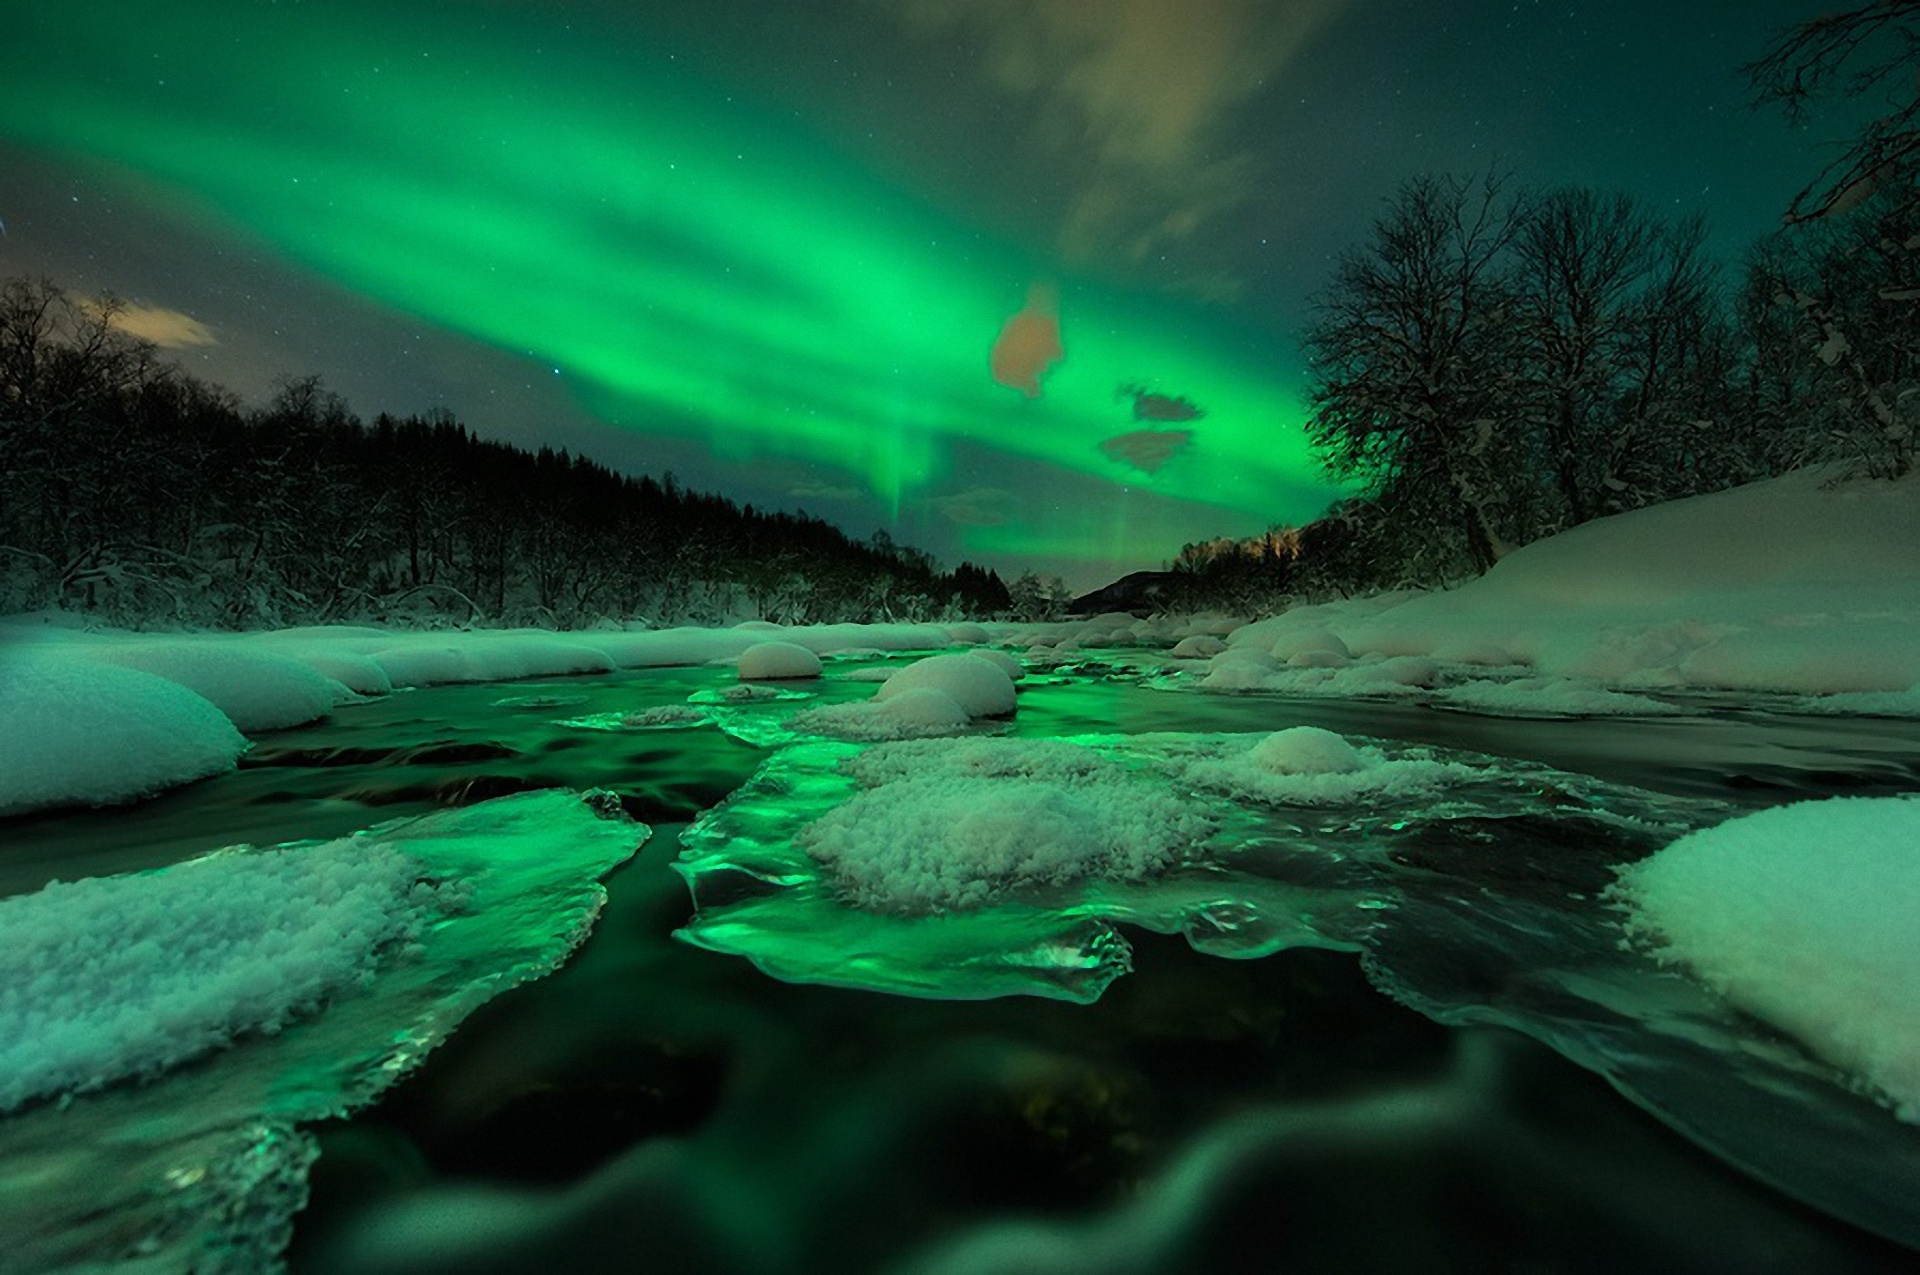 585913 descargar imagen tierra/naturaleza, aurora boreal: fondos de pantalla y protectores de pantalla gratis